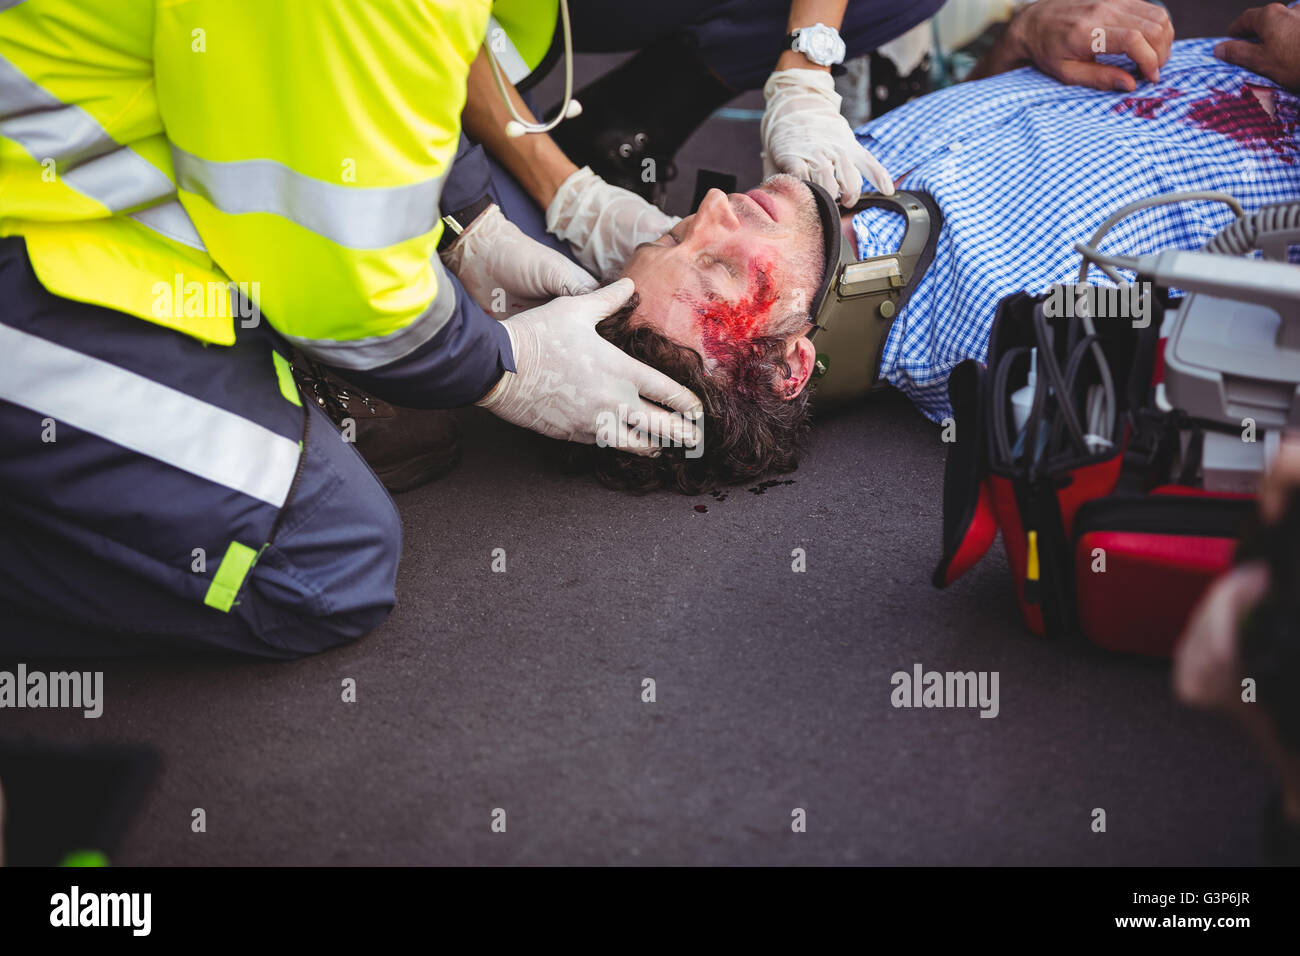 Injured man being taken care of by ambulance crew Stock Photo